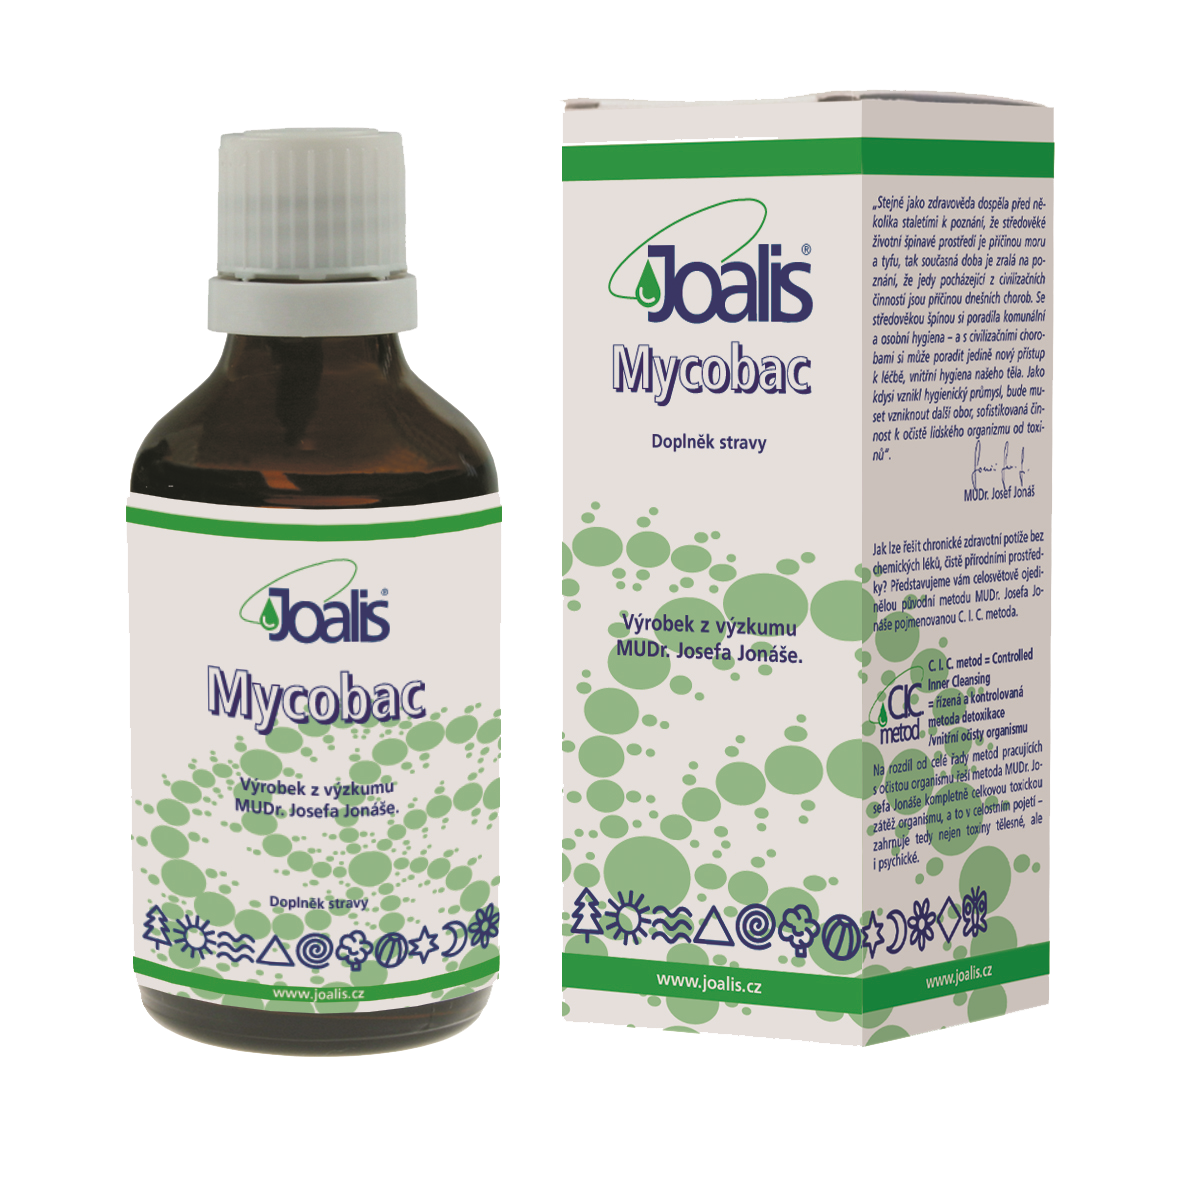 Joalis Mycobac 50 ml